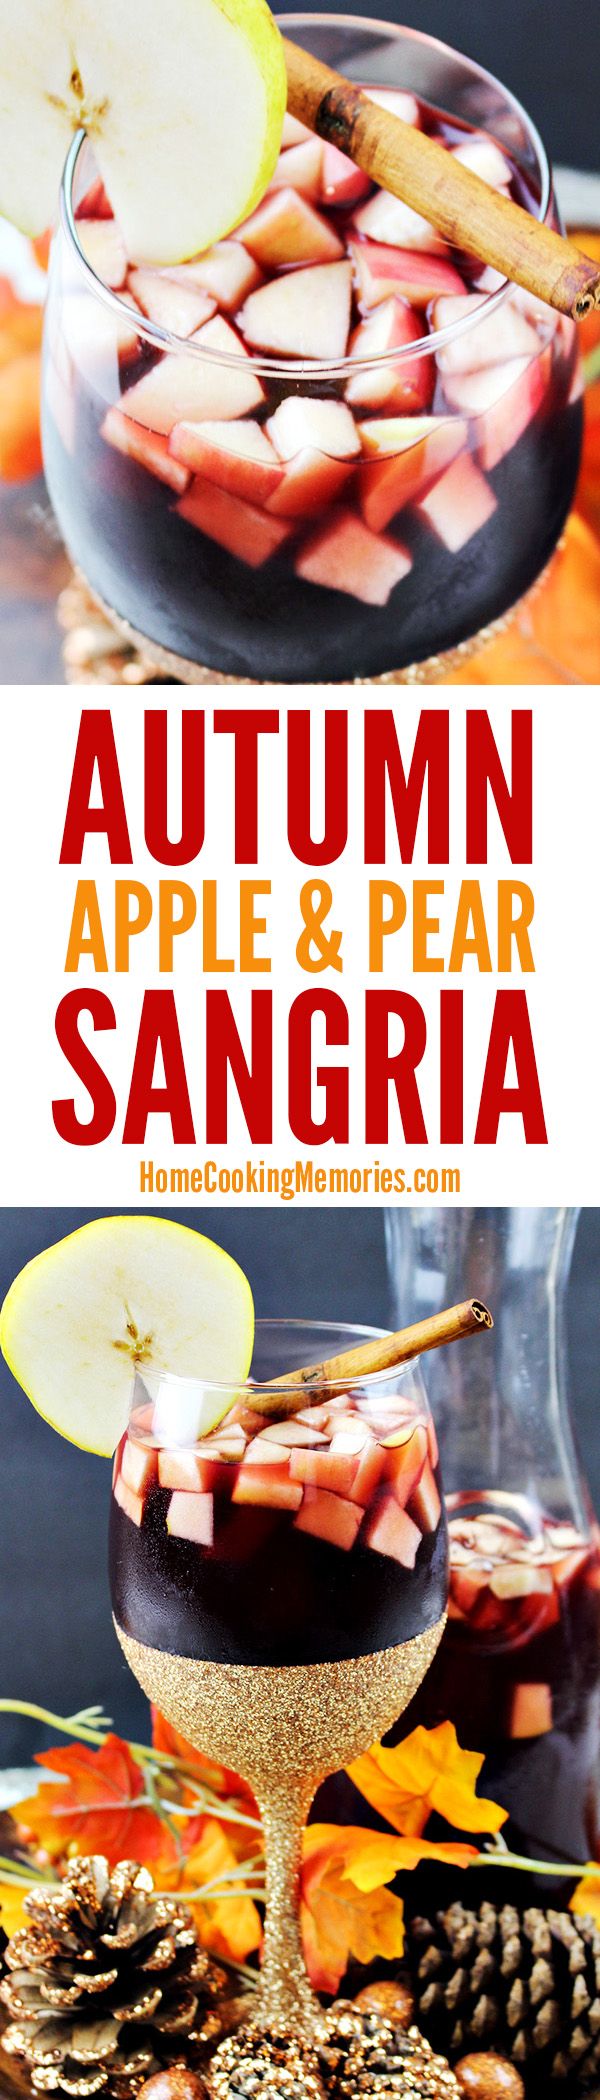 Autumn Apple & Pear Sangria